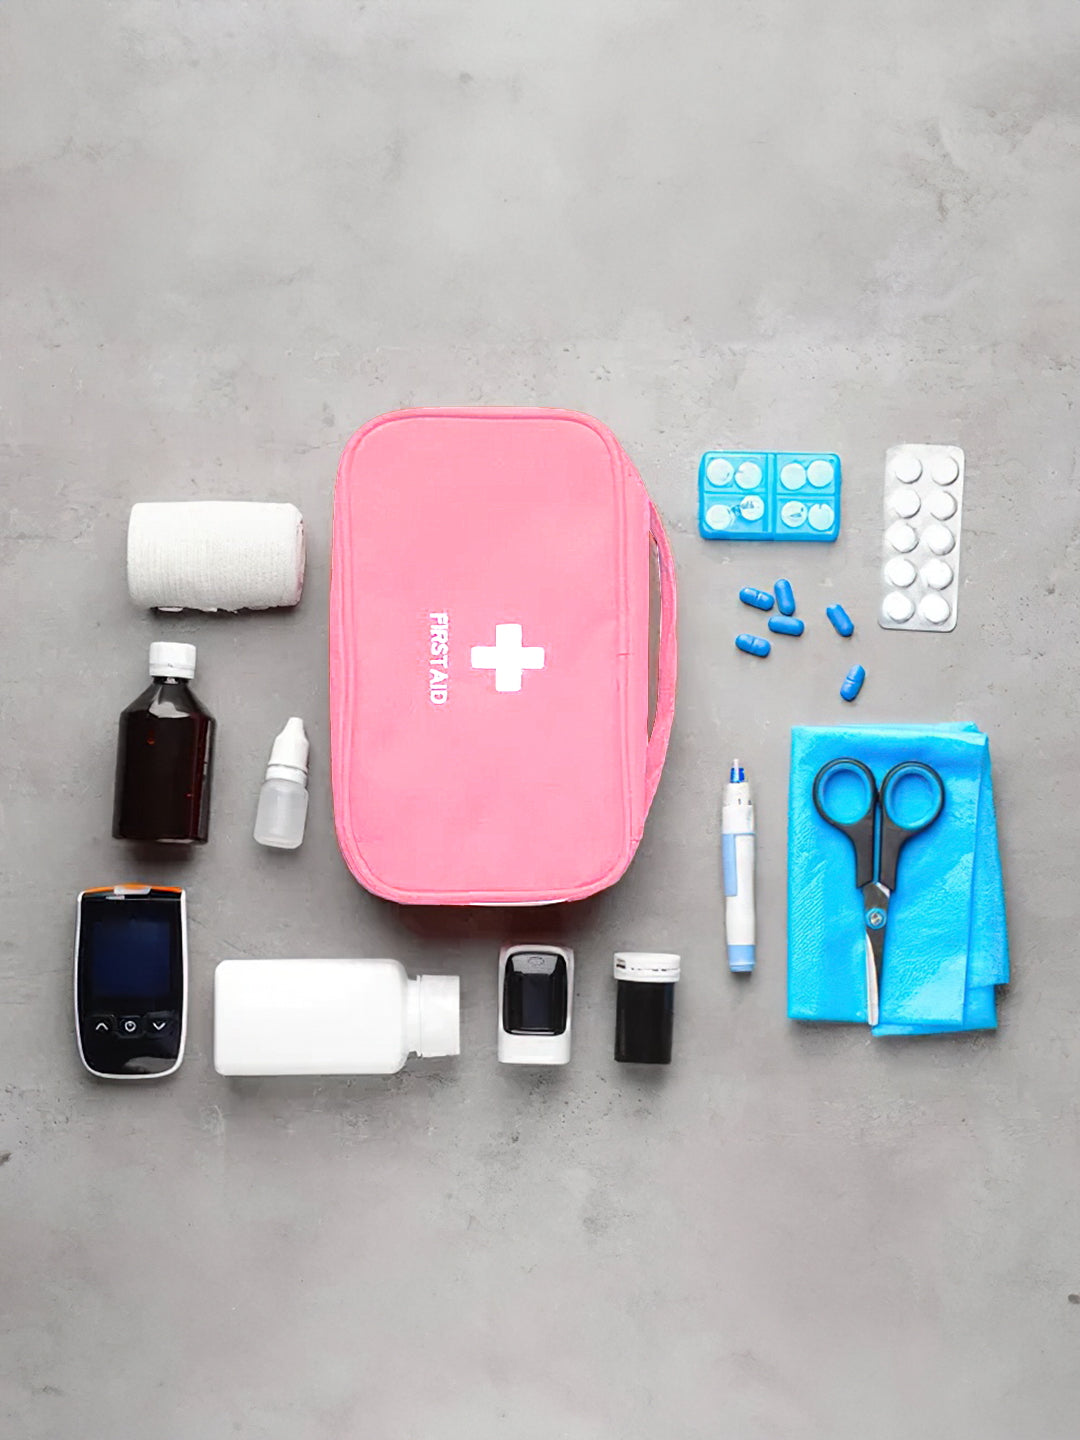 first-aid-organiser-pink